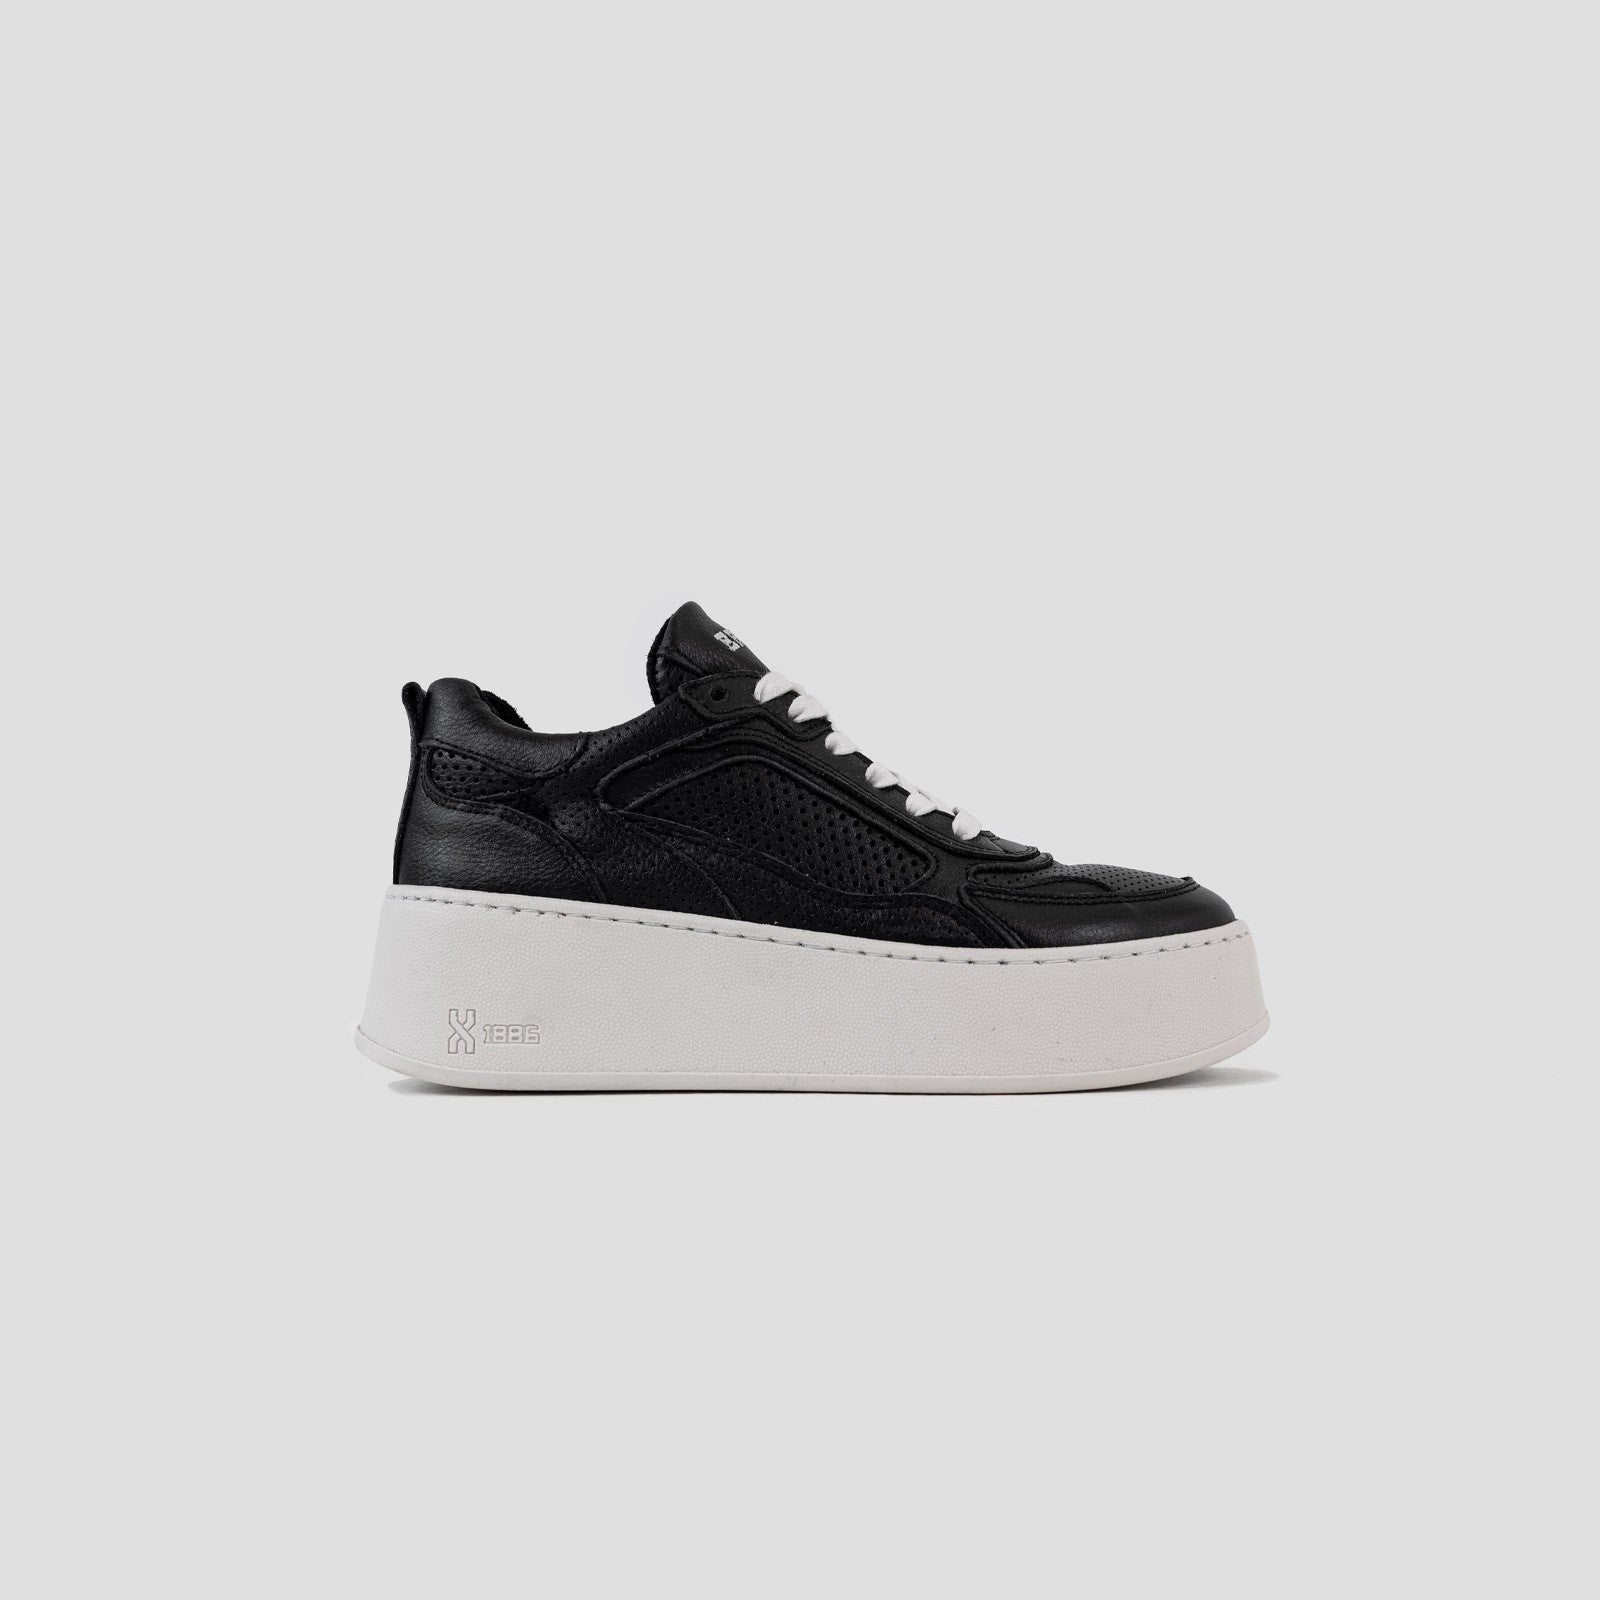 Bumpp In Black Chunky Sneakers 66416-A-01 - 08